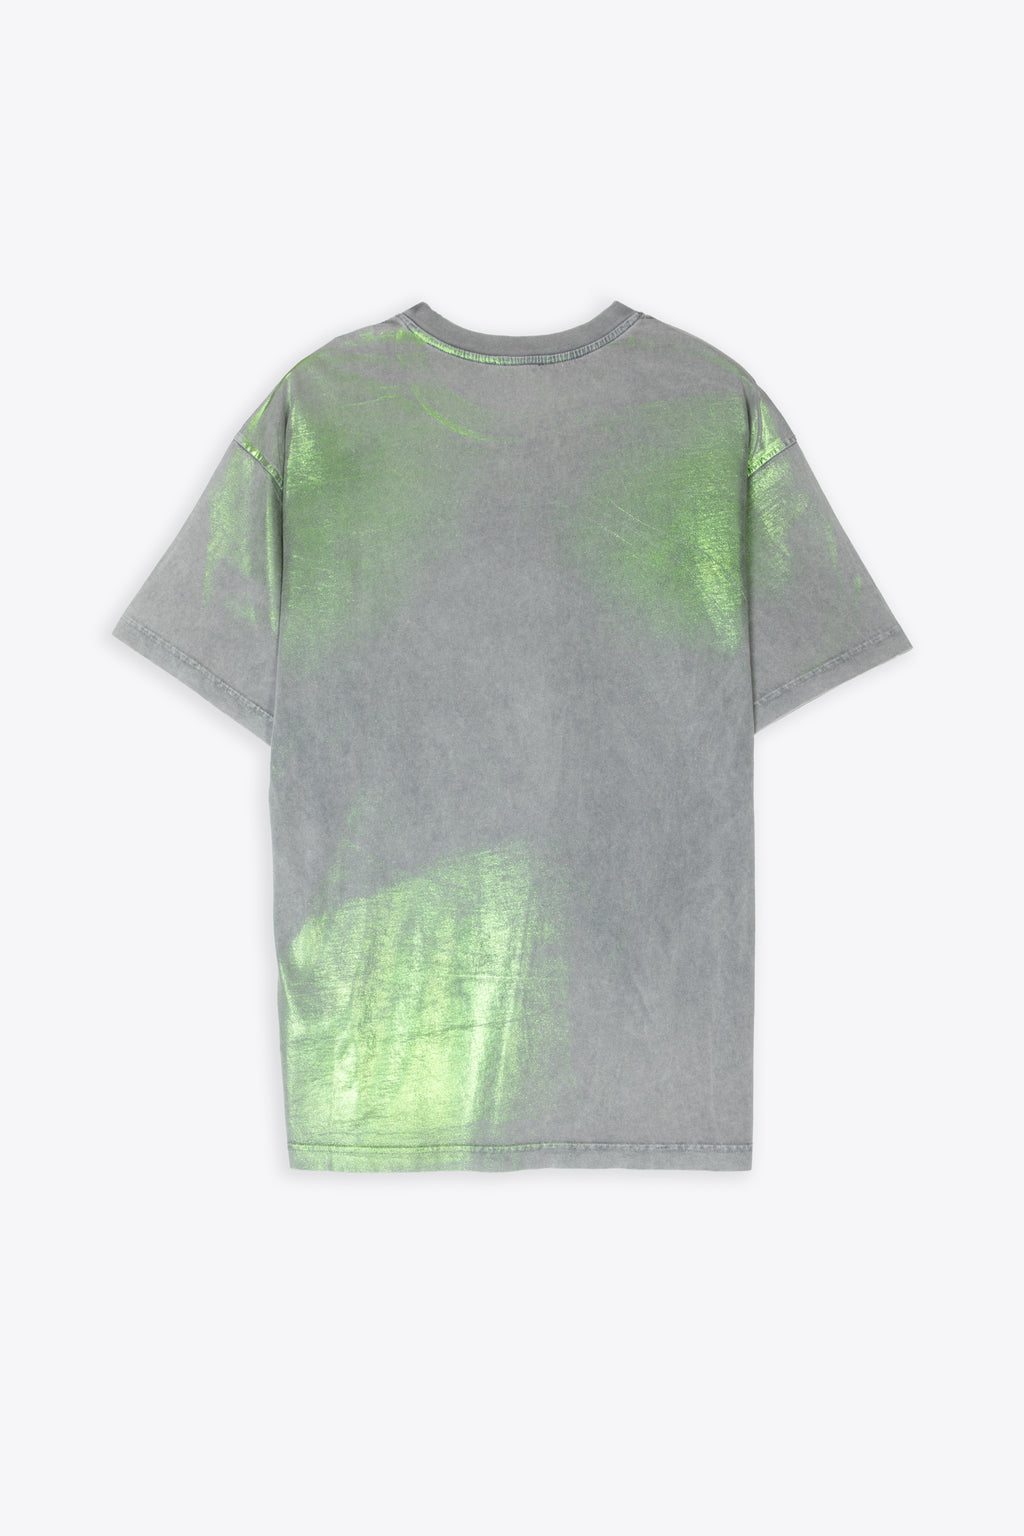 alt-image__T-shirt-unisex-grigia-con-effetto-metallizzato-verde---T-Buxt